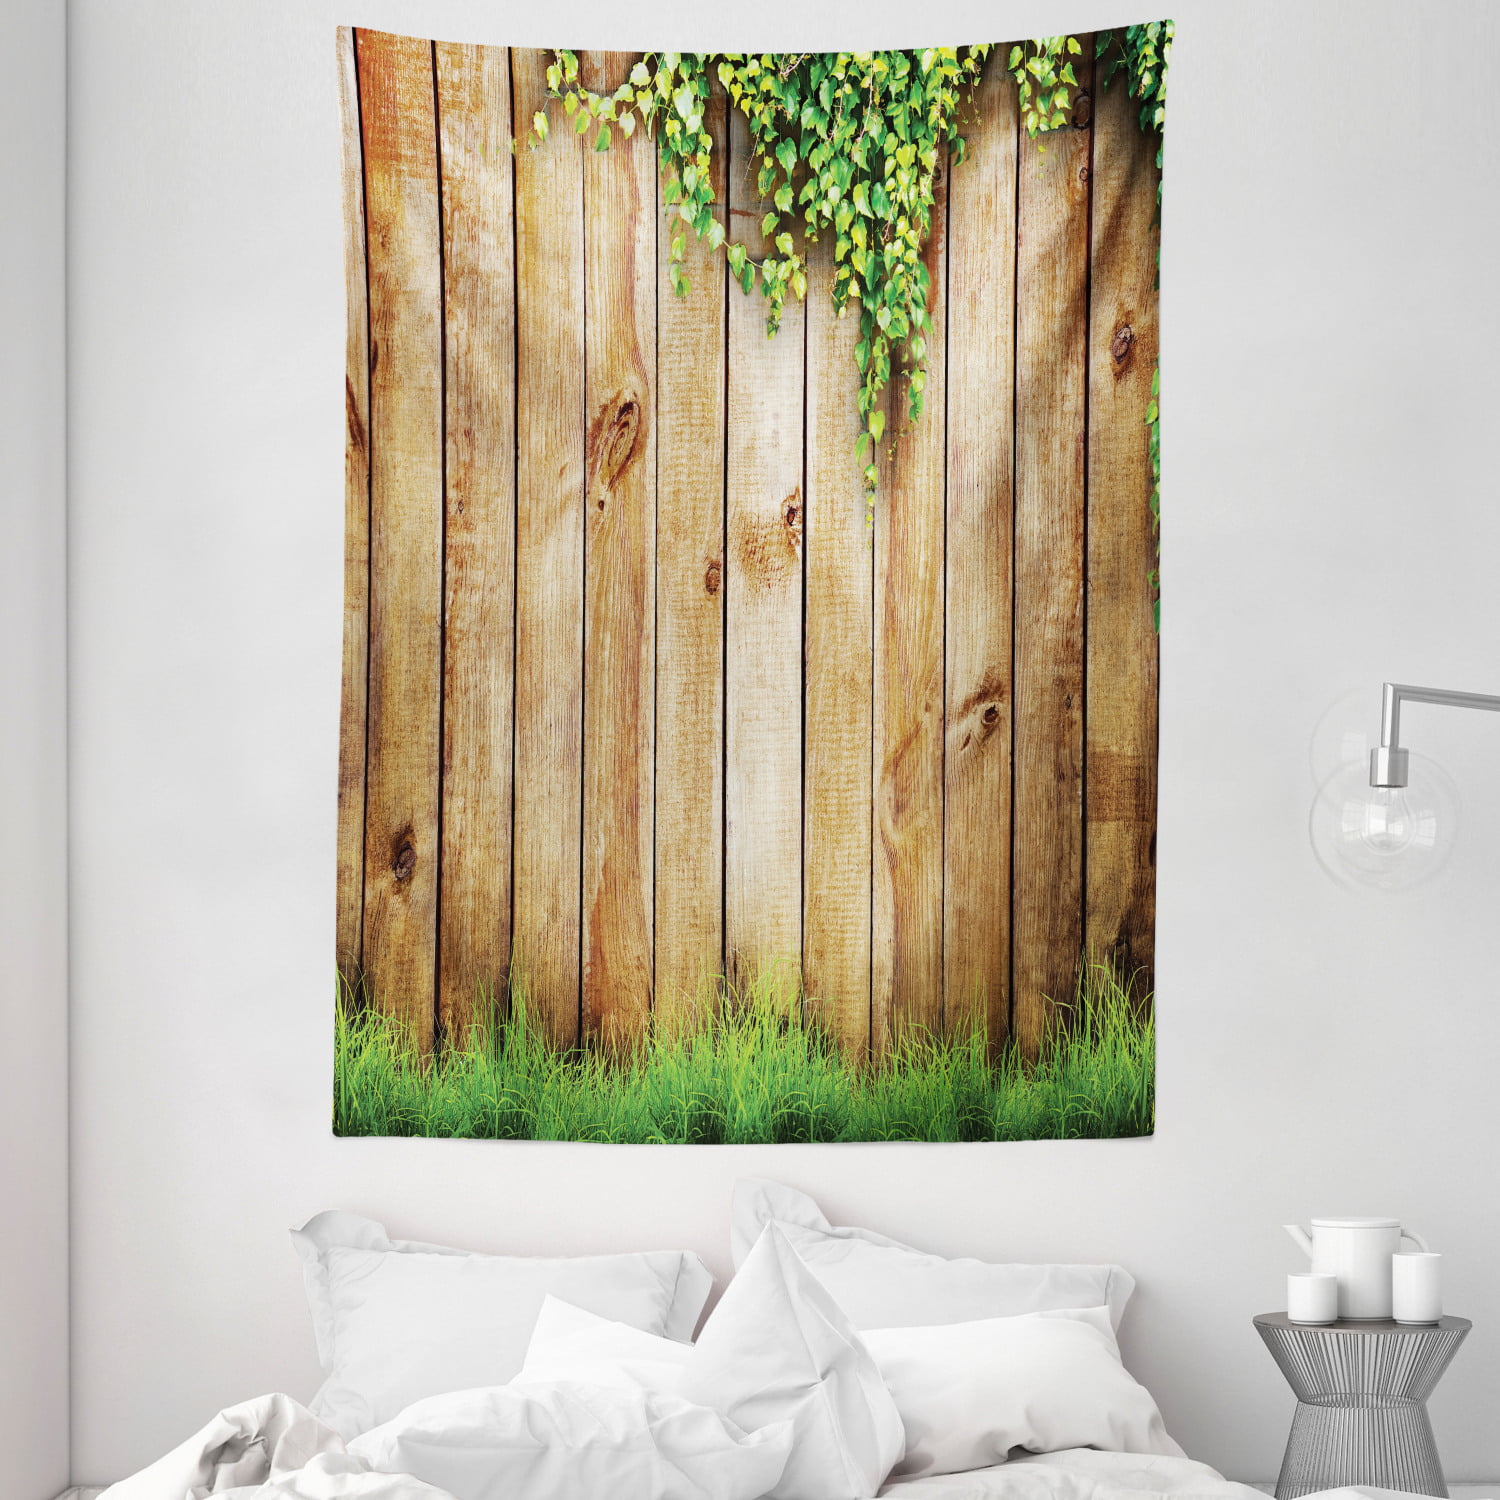 Green Leaf Tapestry Wall Hanging Living Room Bedroom Dorm Decor 